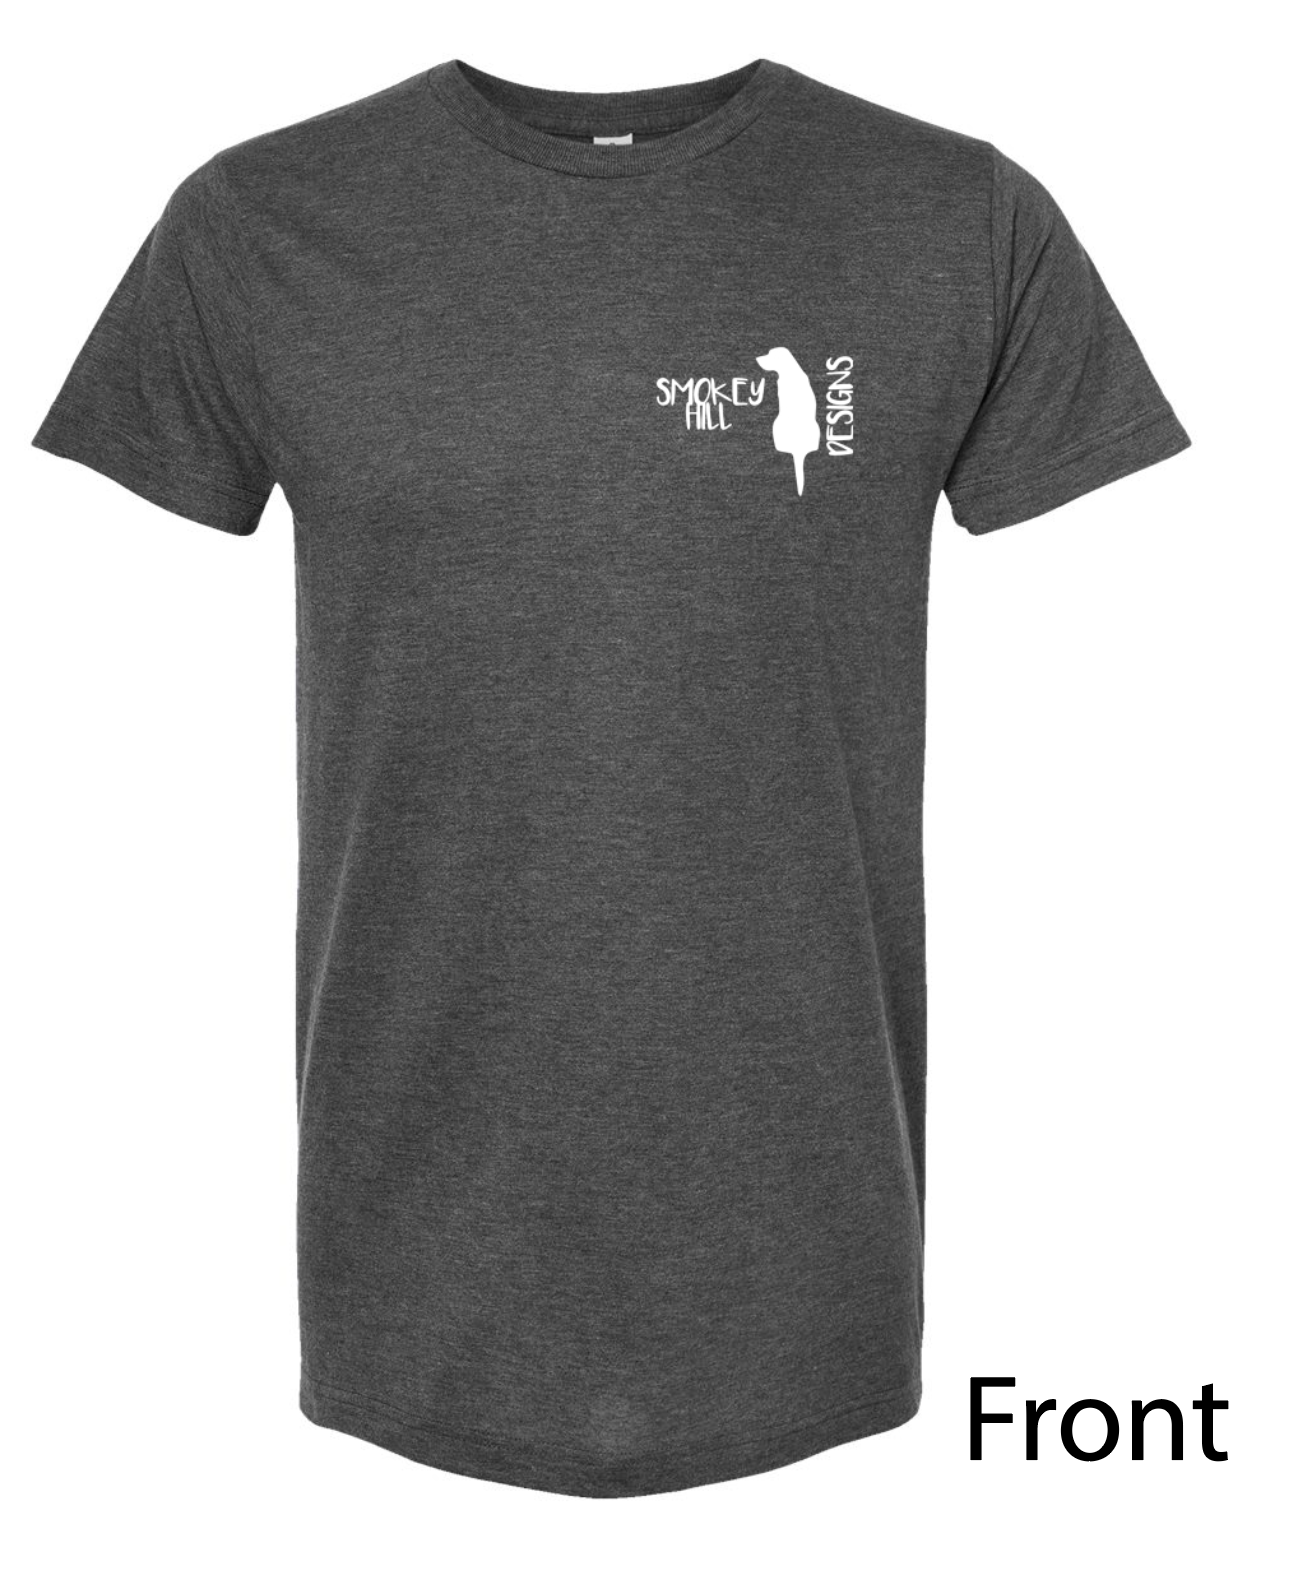 Adult SmokeFest T-Shirt #1 (Sunrise Design)